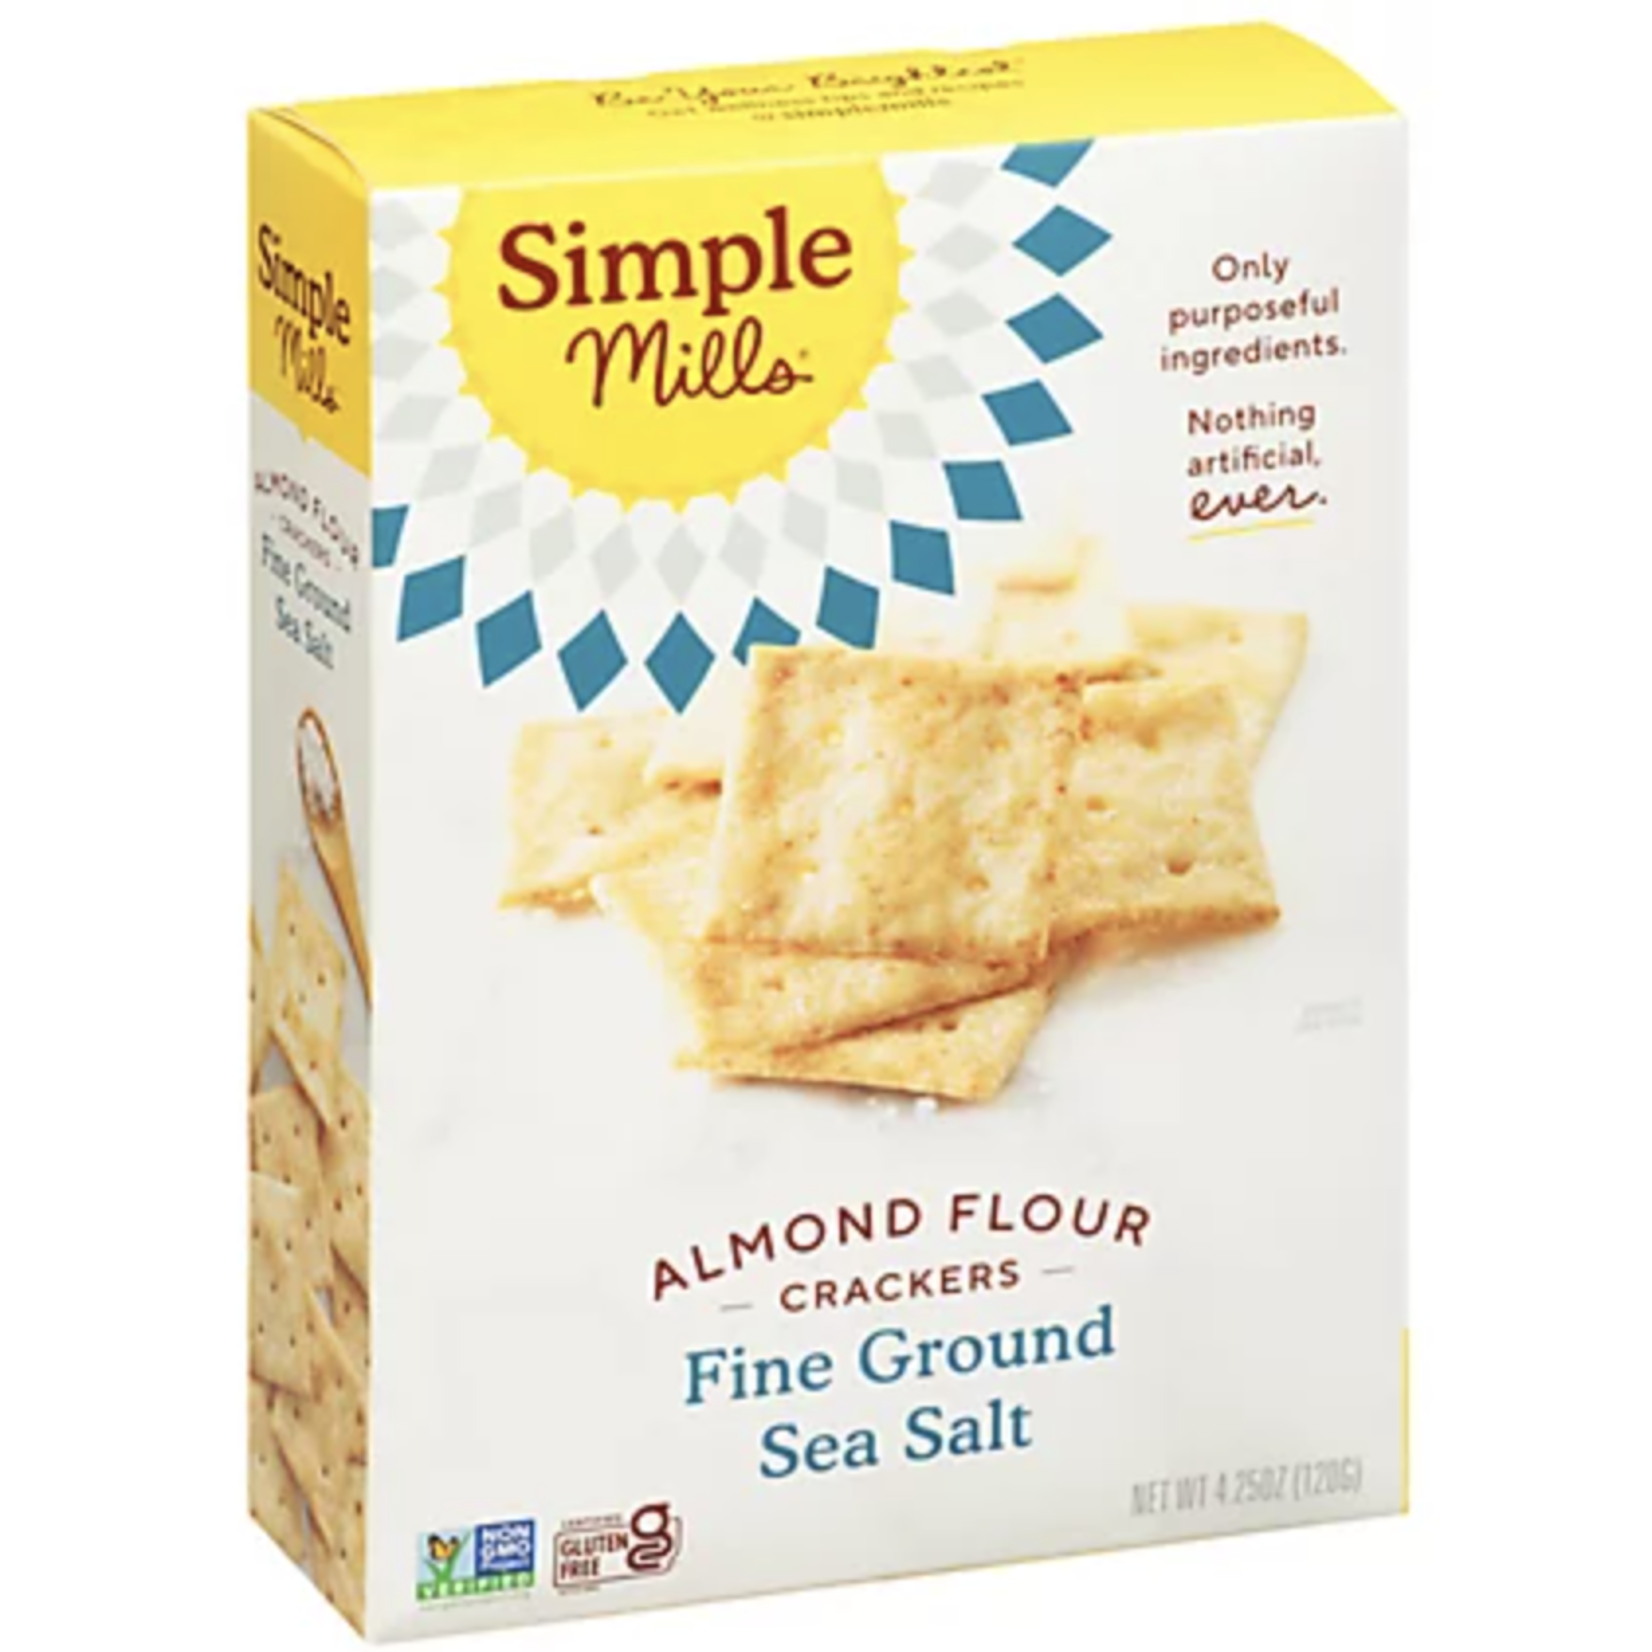 UNFI Simple Mills Crackers, Fine Ground Sea Salt